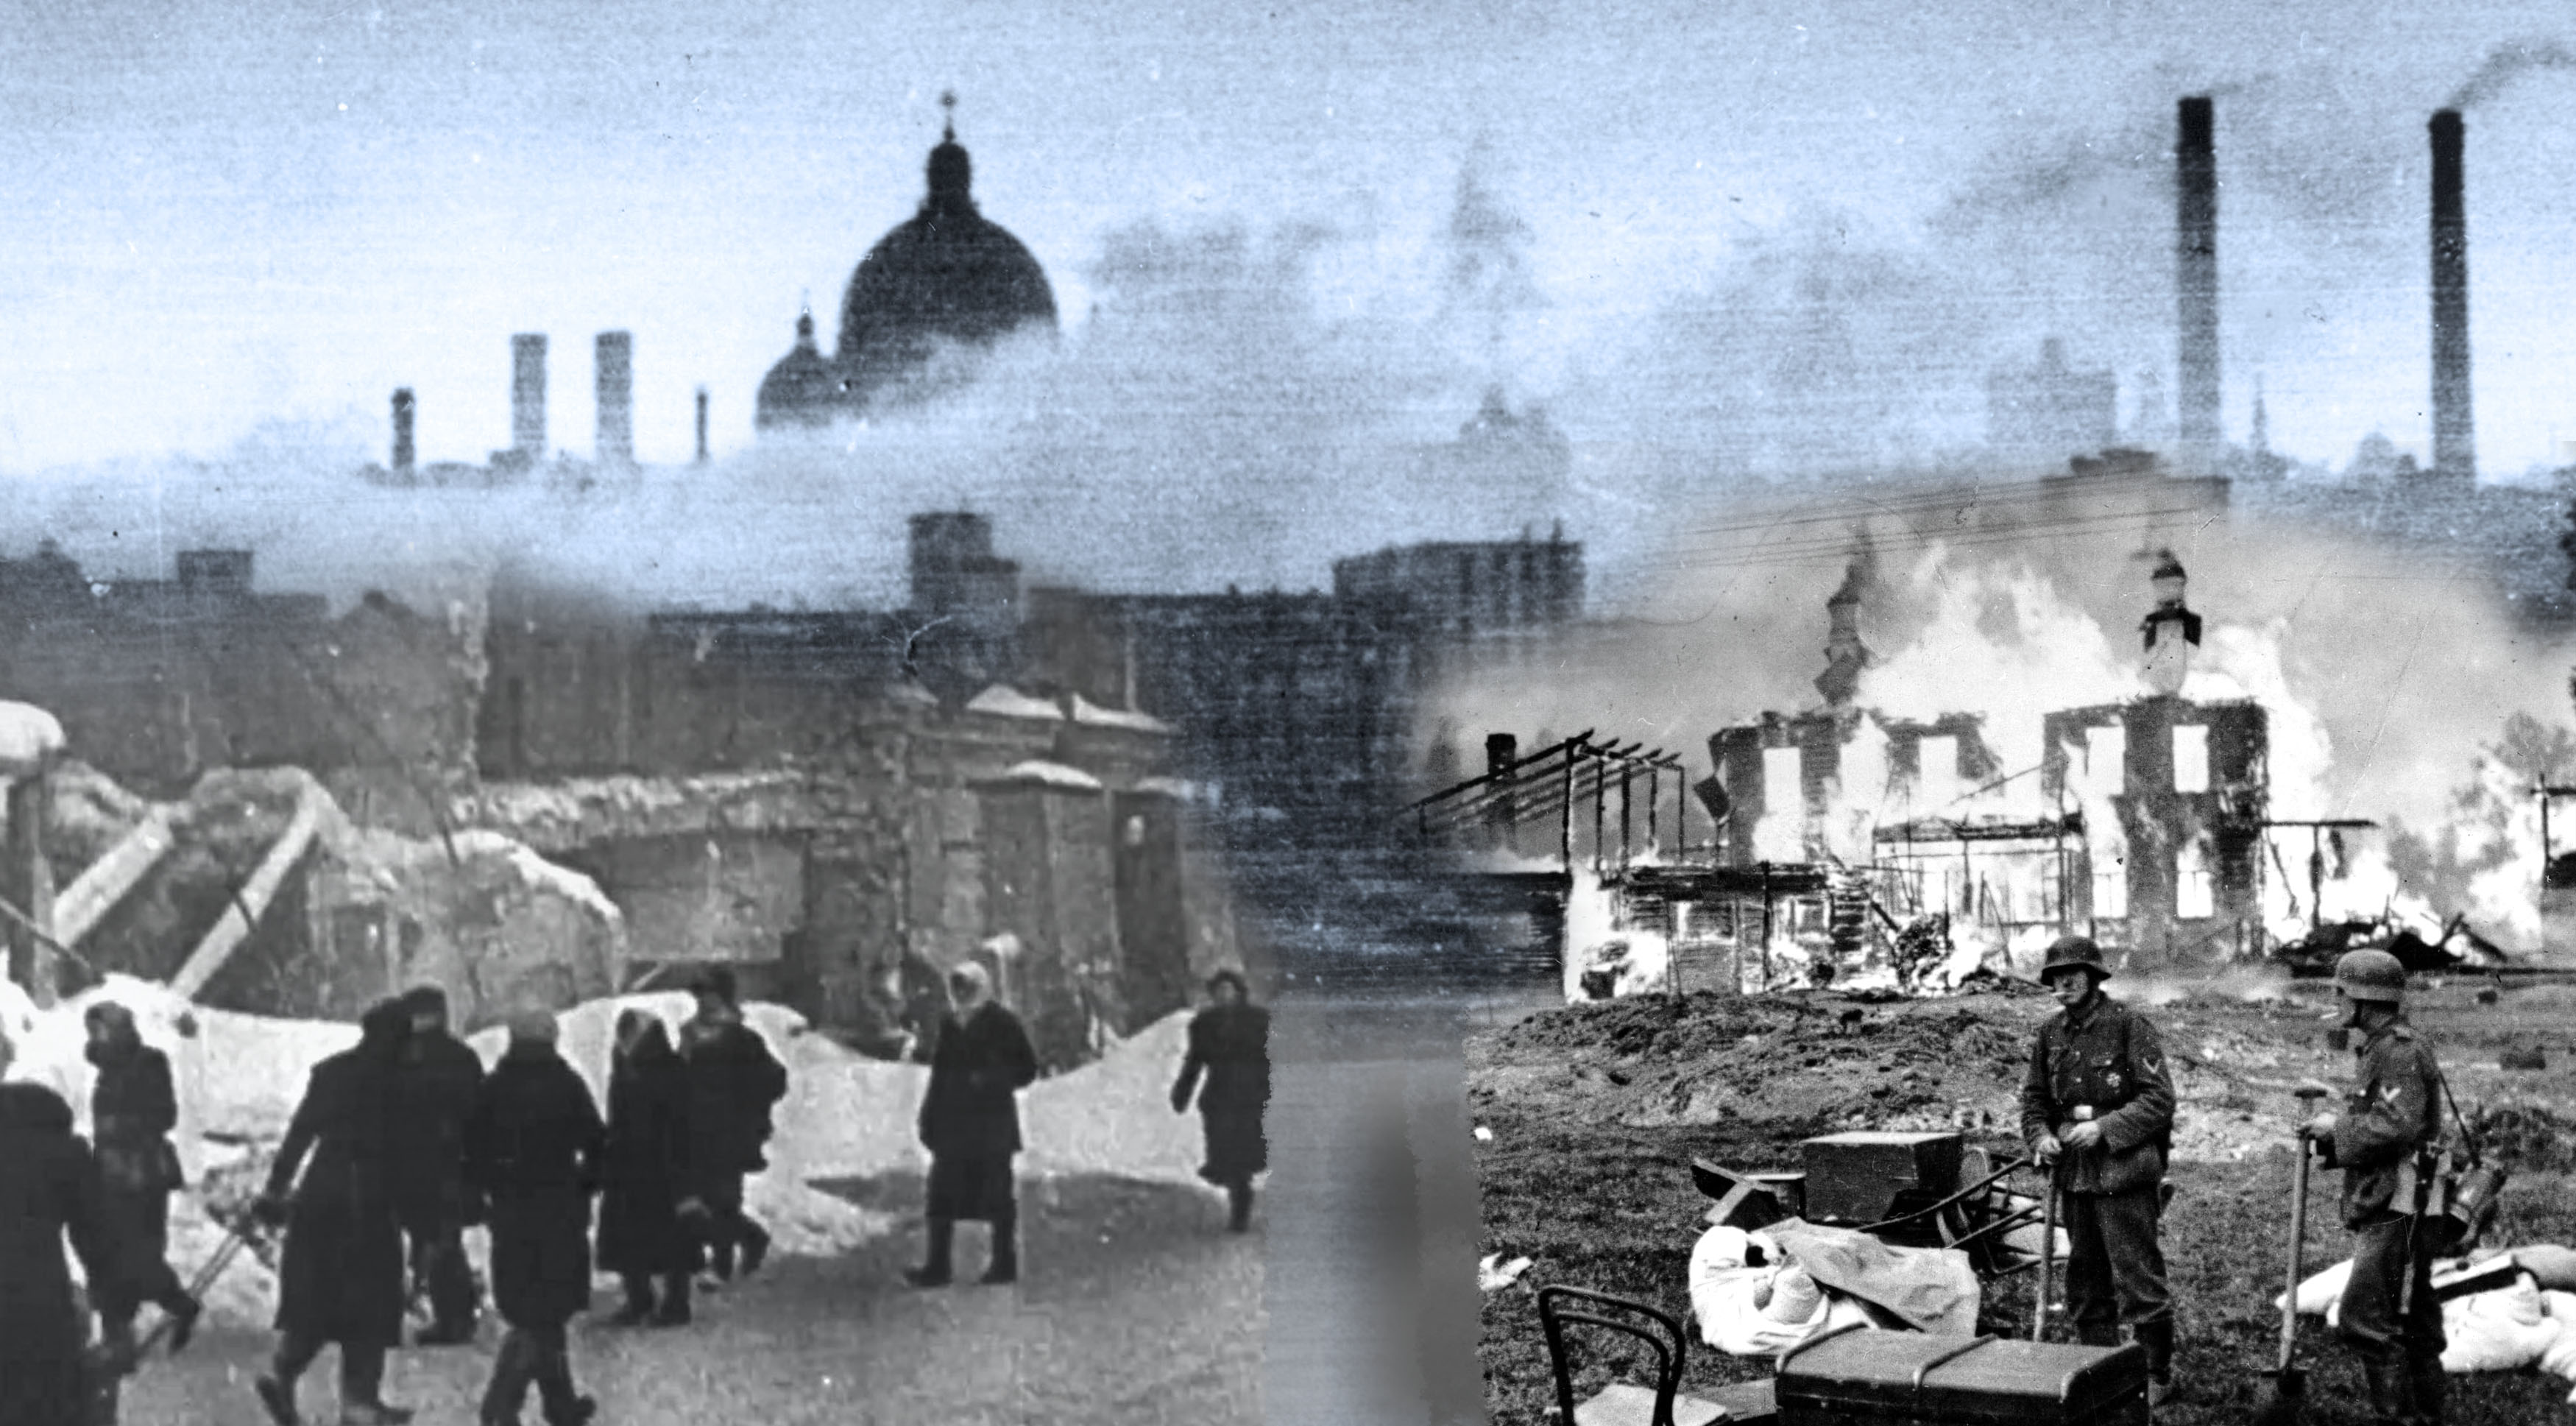 Siege of Leningrad during World War 2. 